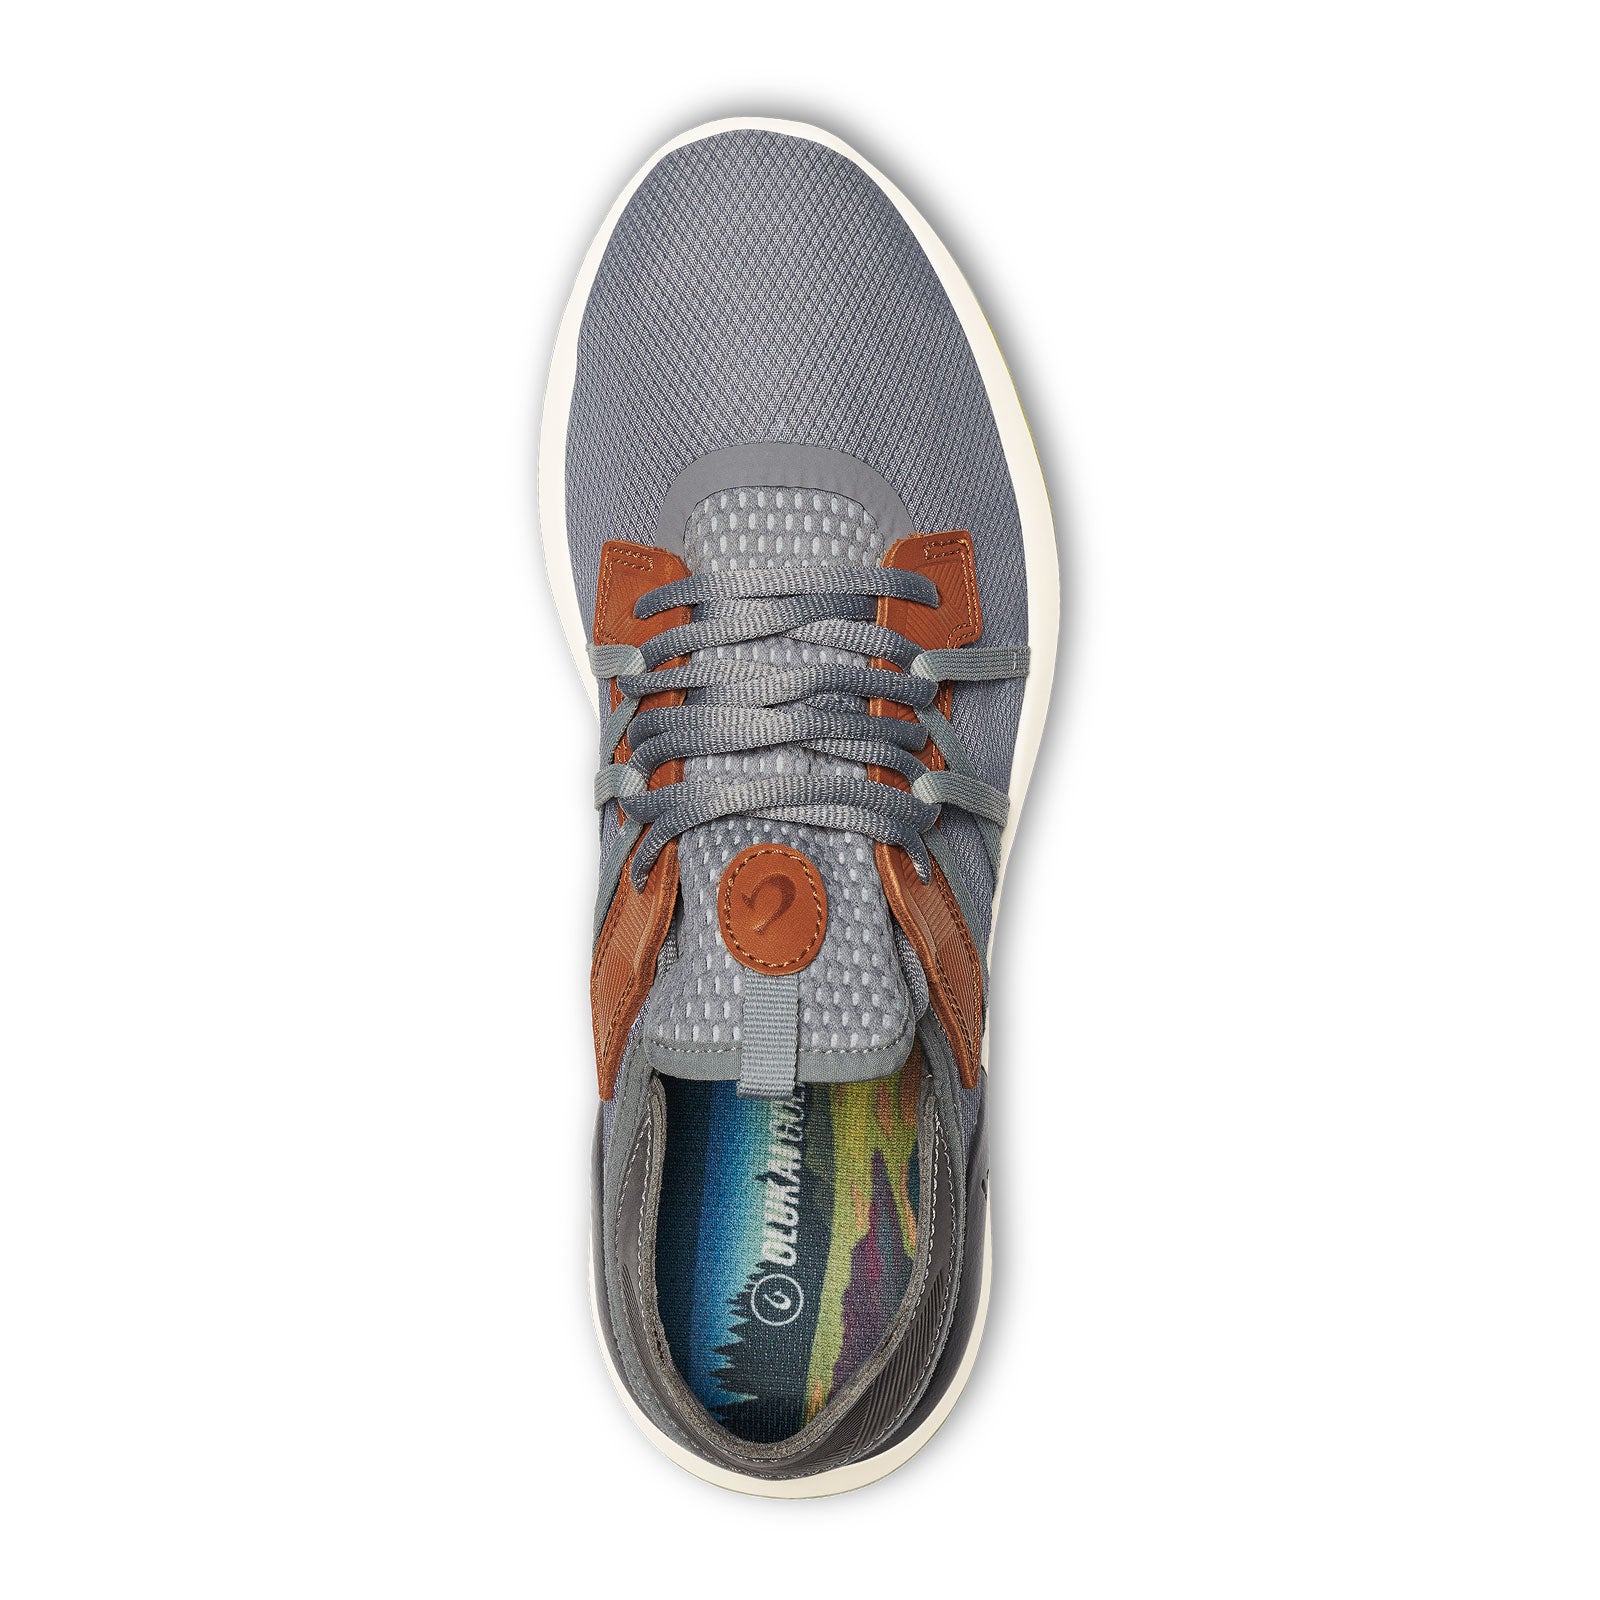 OluKai Kapalua Golf Shoe (Men) - Poi/Charcoal Athletic - Golf - The Heel Shoe Fitters